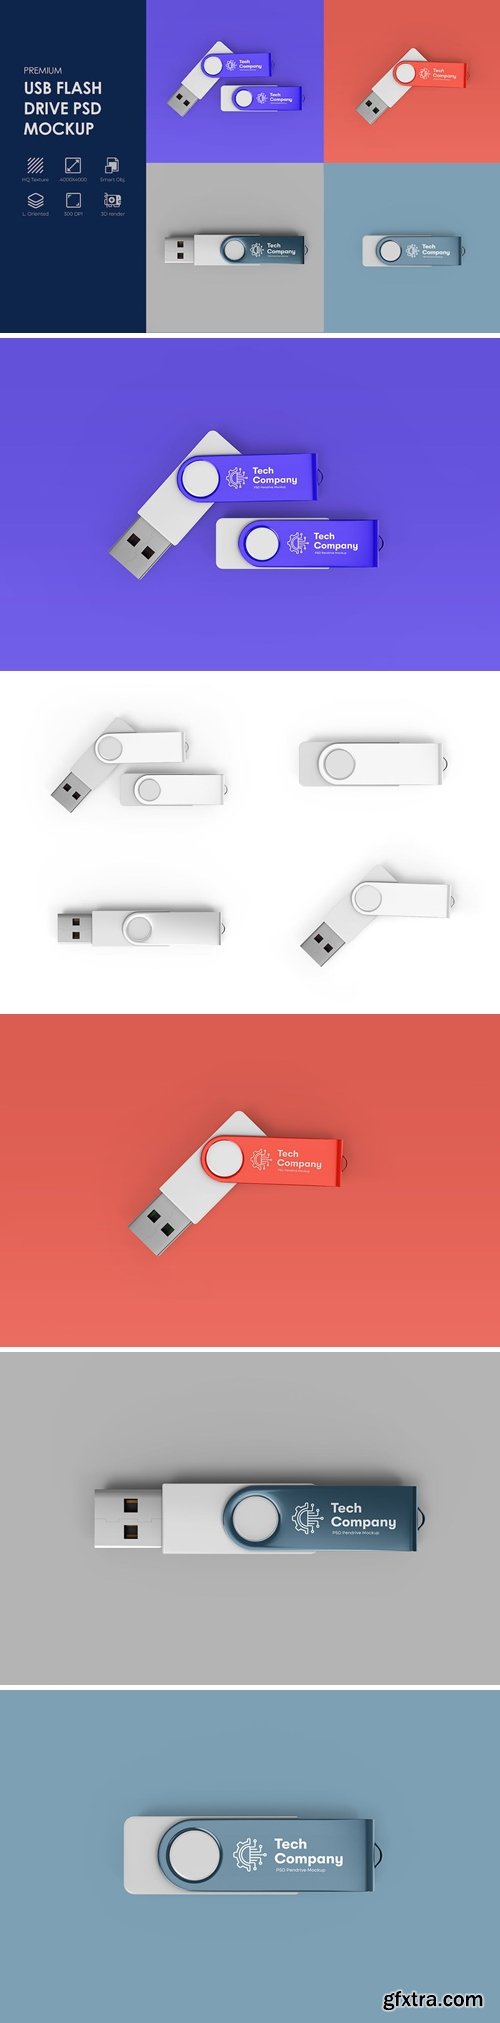 USB Flash Drive Mockup LY6TYR8